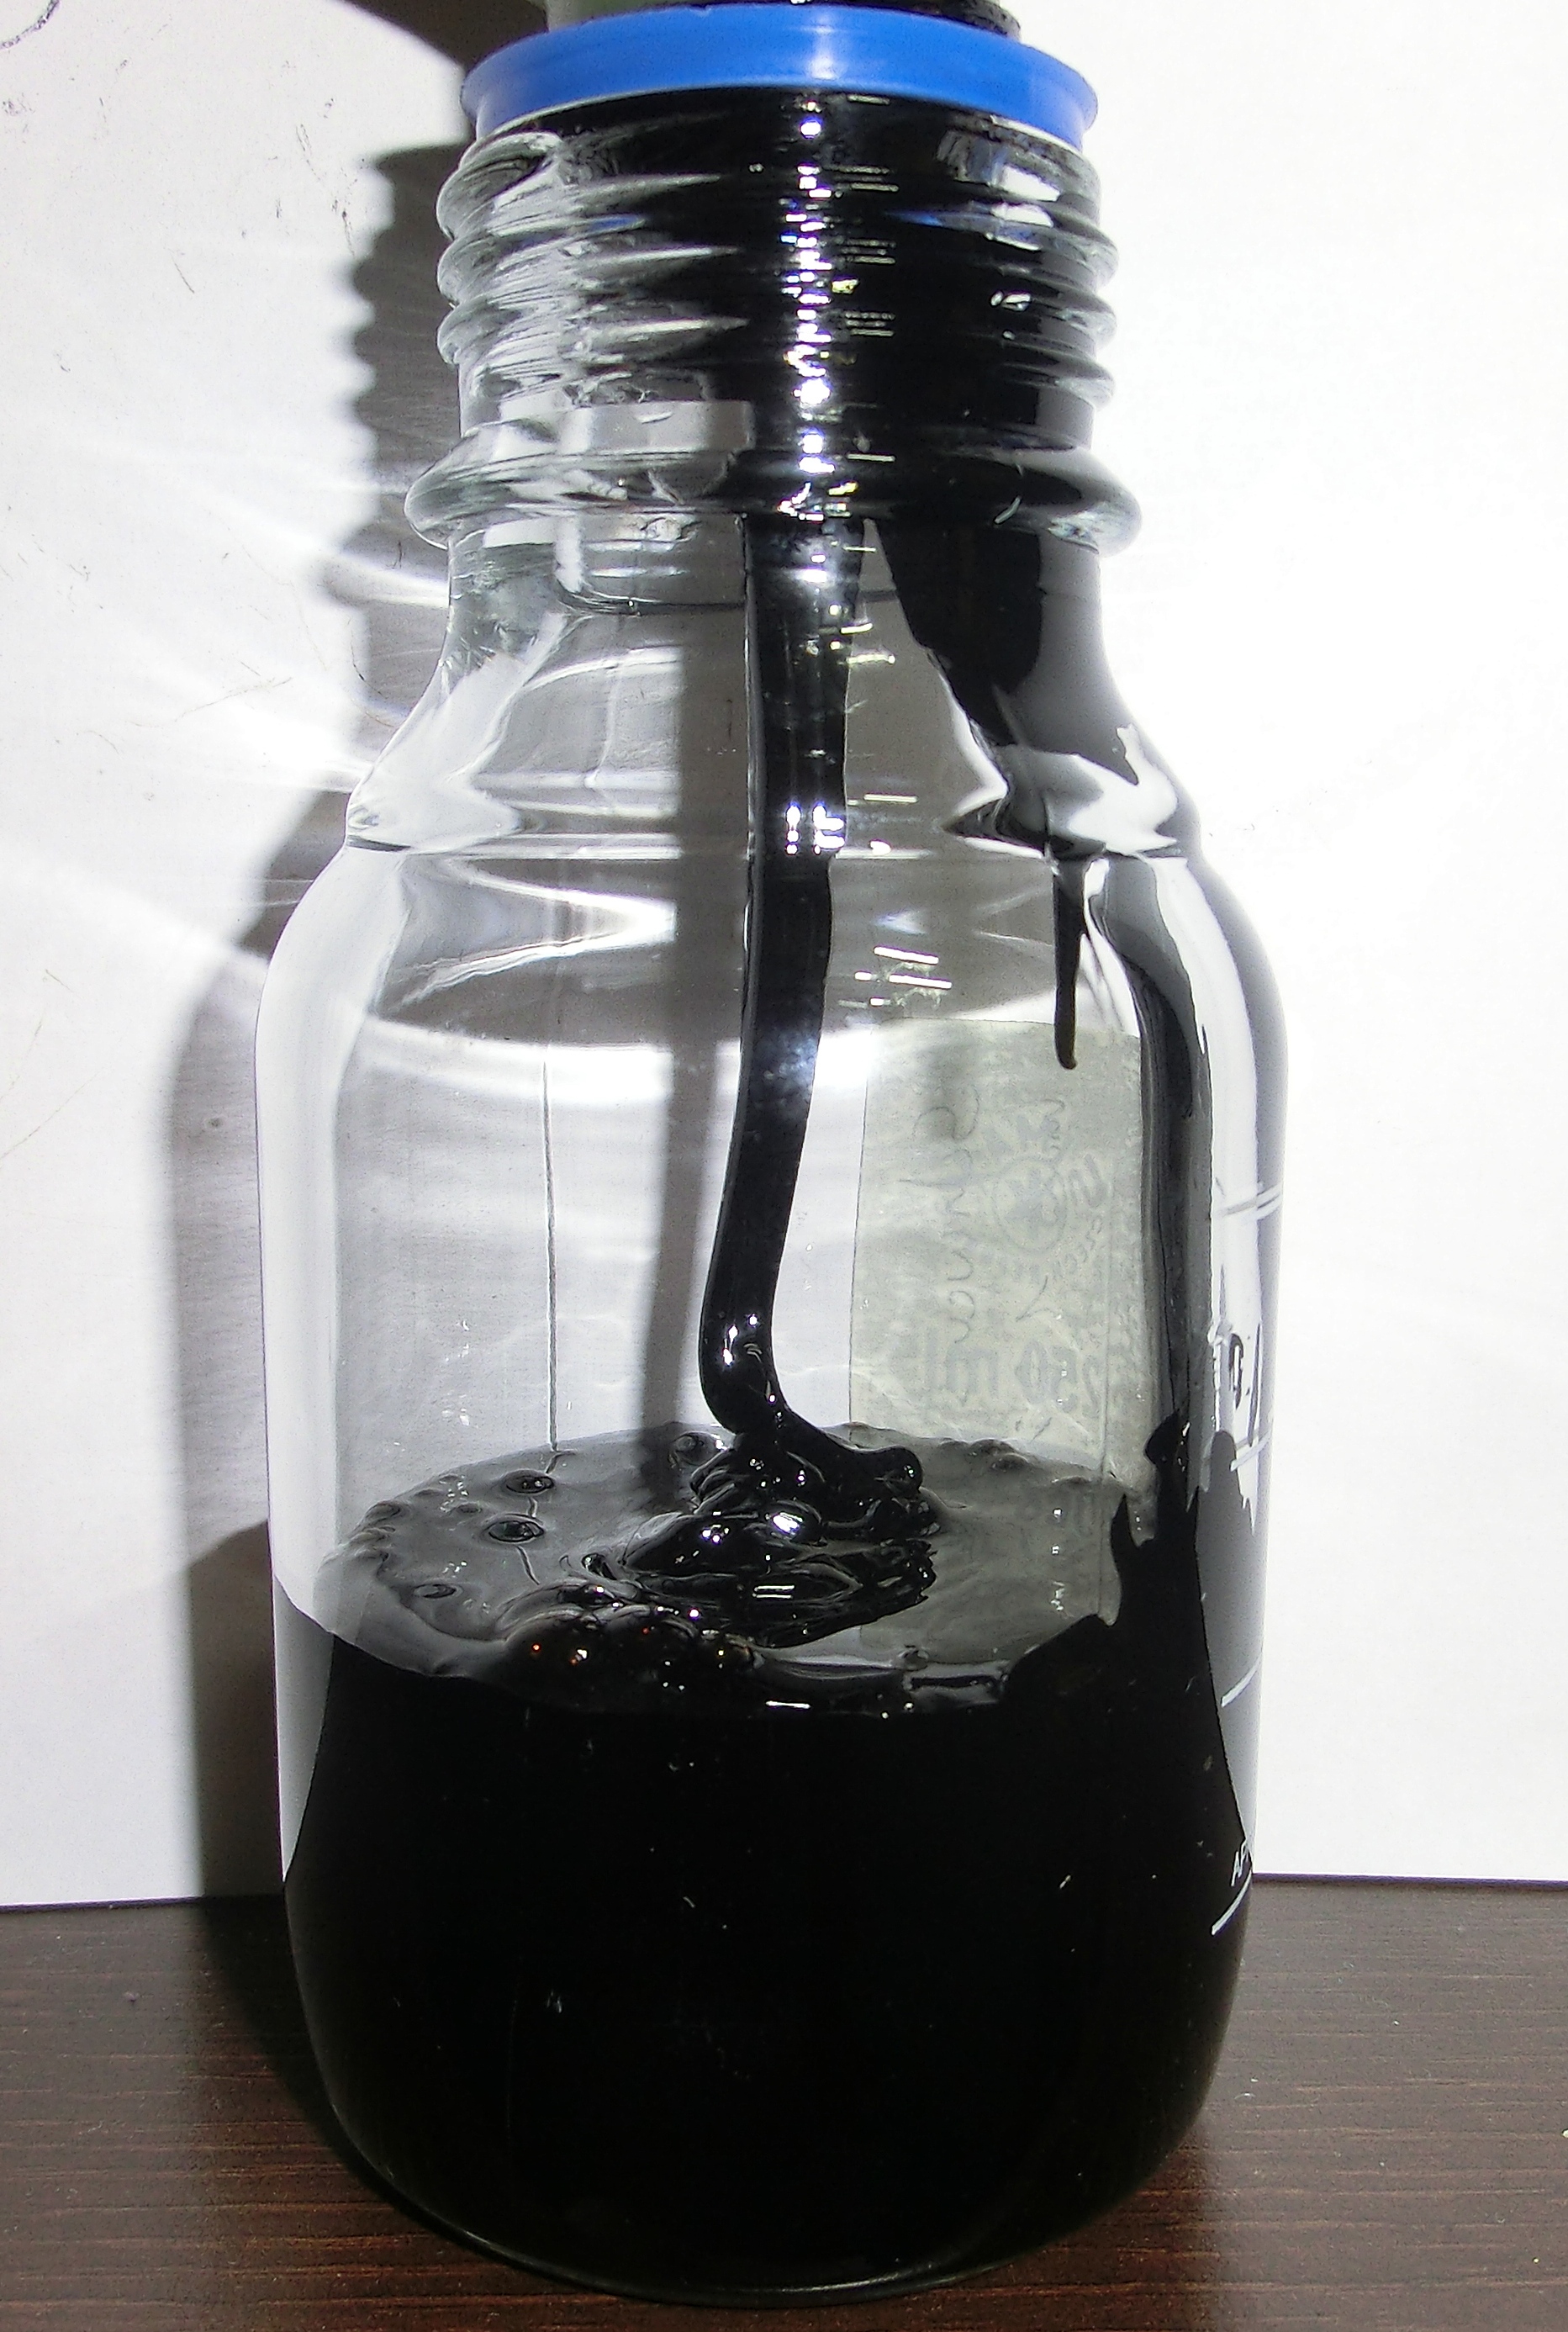 File:Residual fuel oil.JPG - Wikimedia Commons